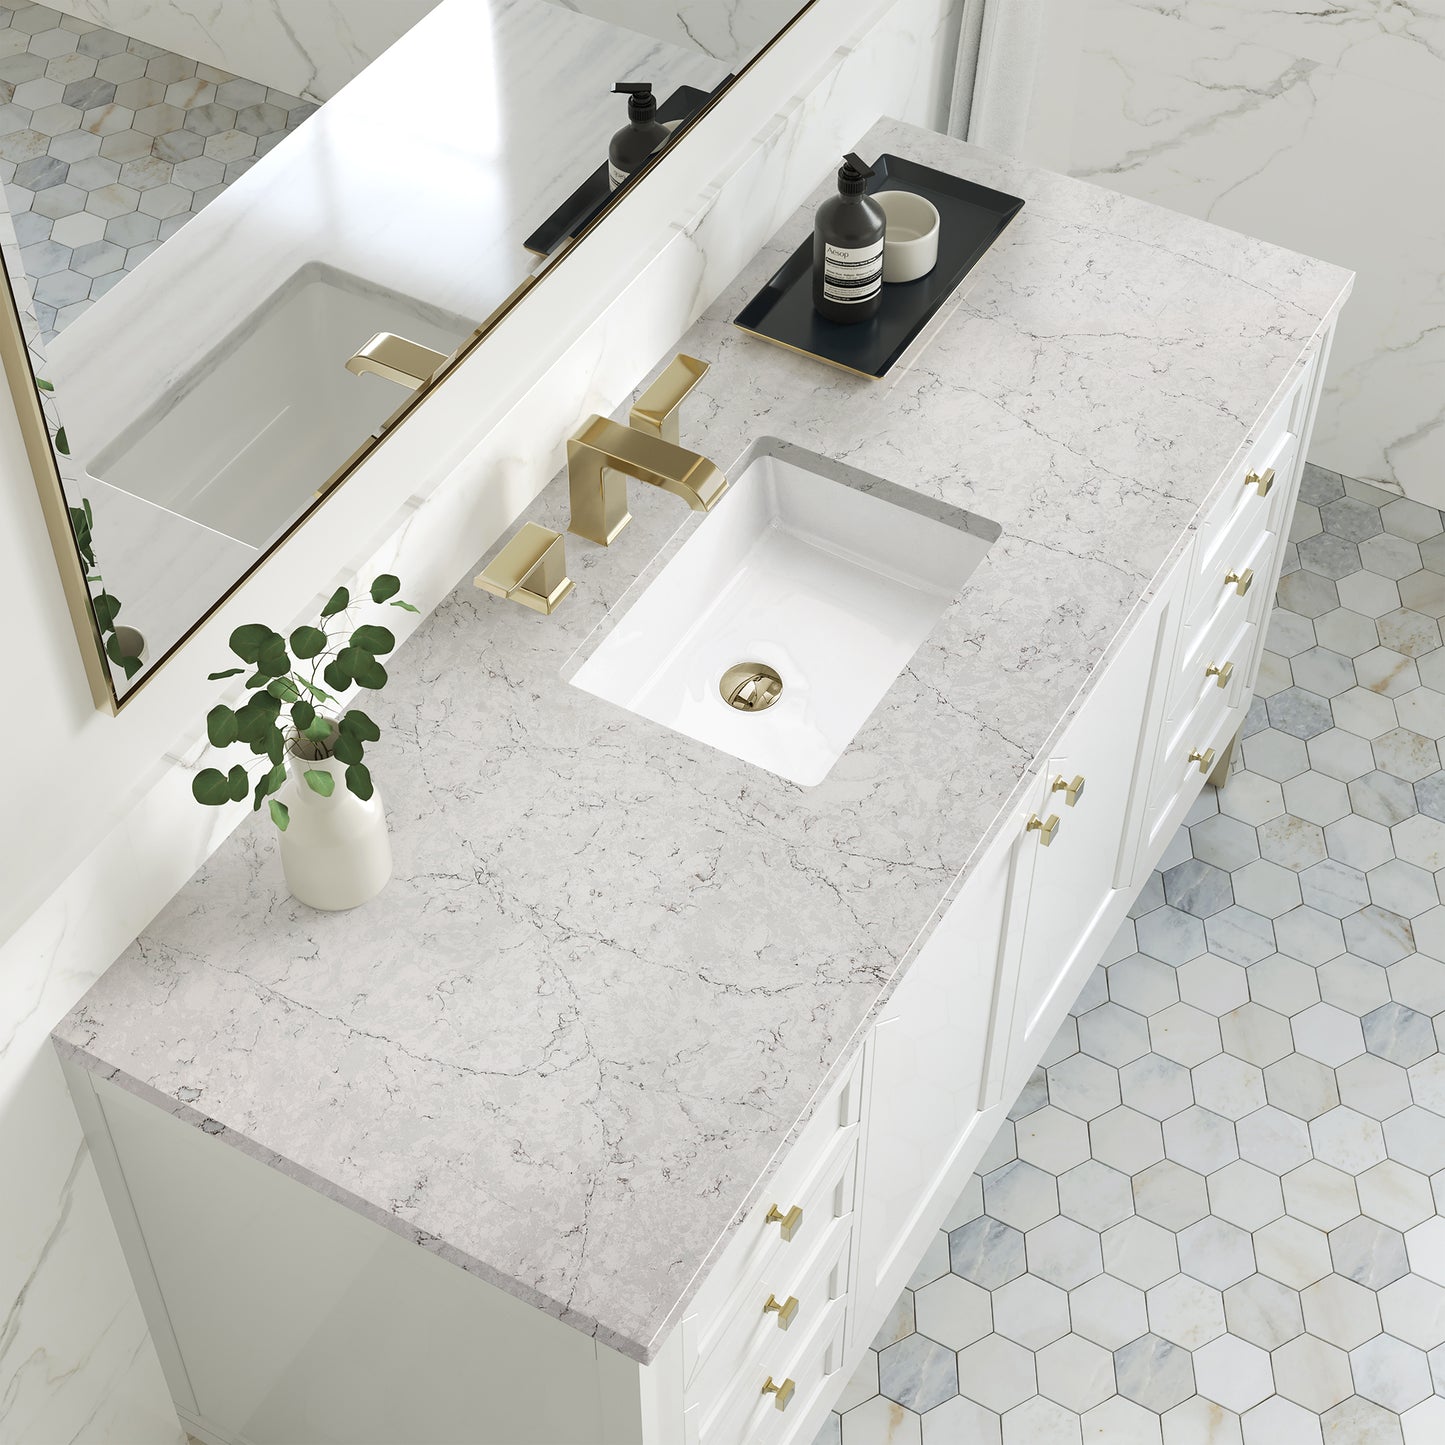 James Martin Chicago 60" Single Vanity, Glossy White - Luxe Bathroom Vanities